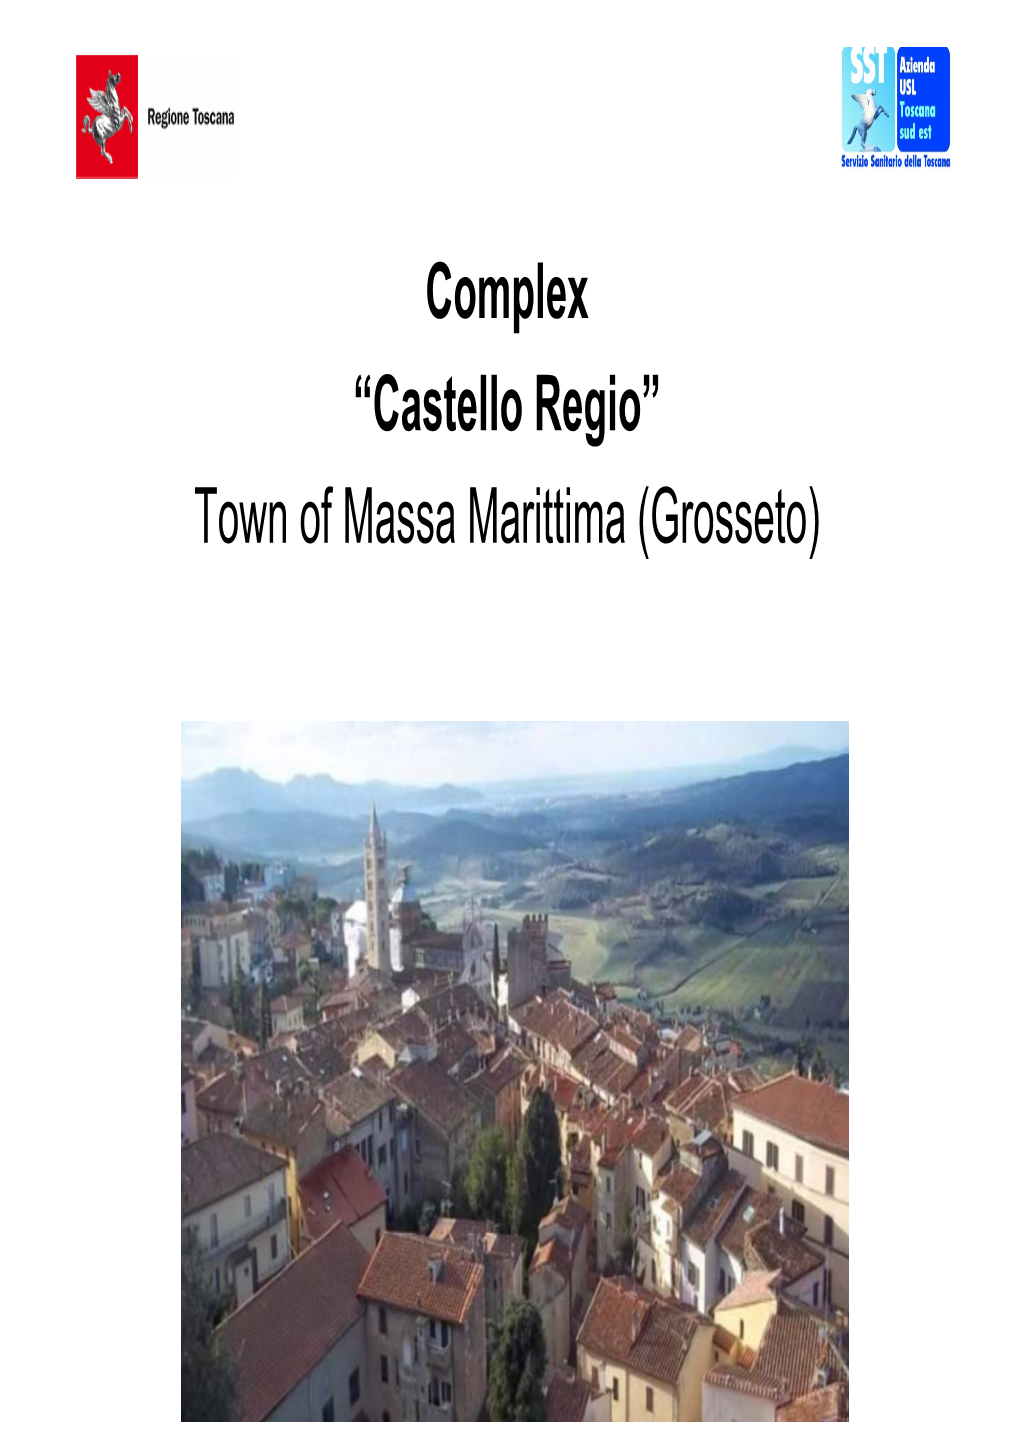 Complex “Castello Regio” Town of Massa Marittima (Grosseto) Map of Tuscany with Location of Massa Marittima (Grosseto)